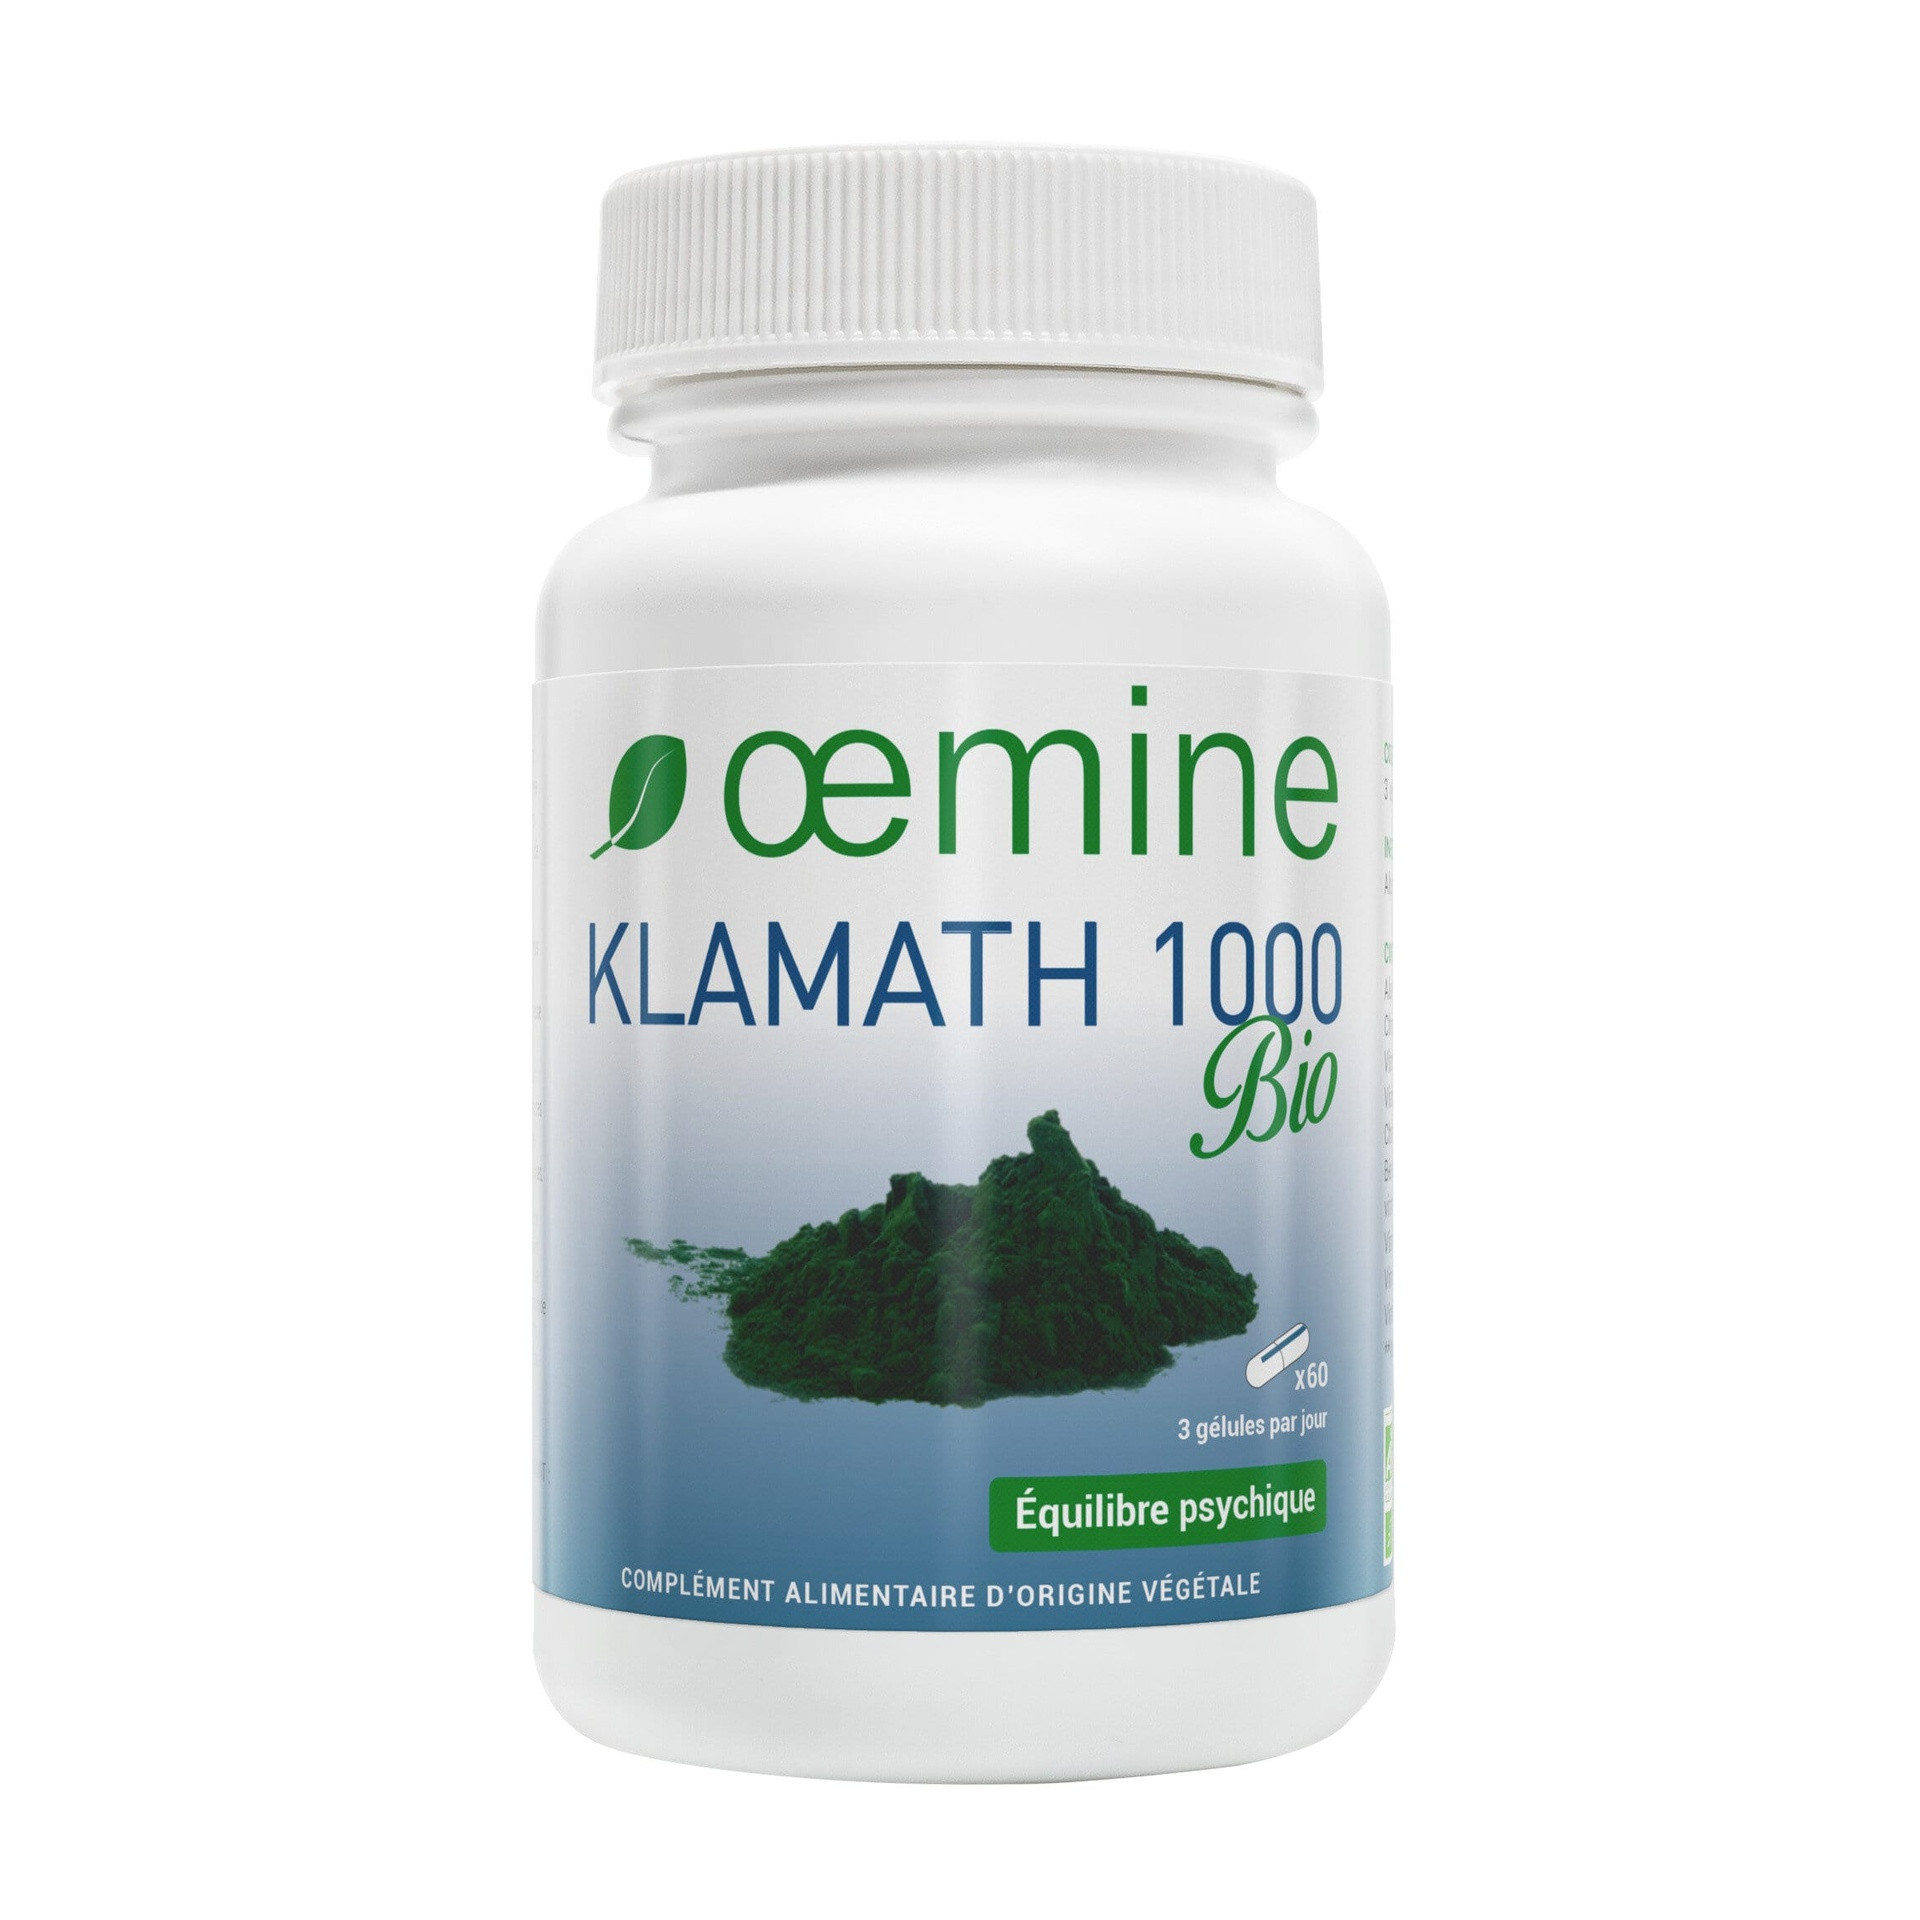 Klamath 1000 : fatigue, anémie - 60 gélules - OEMINE